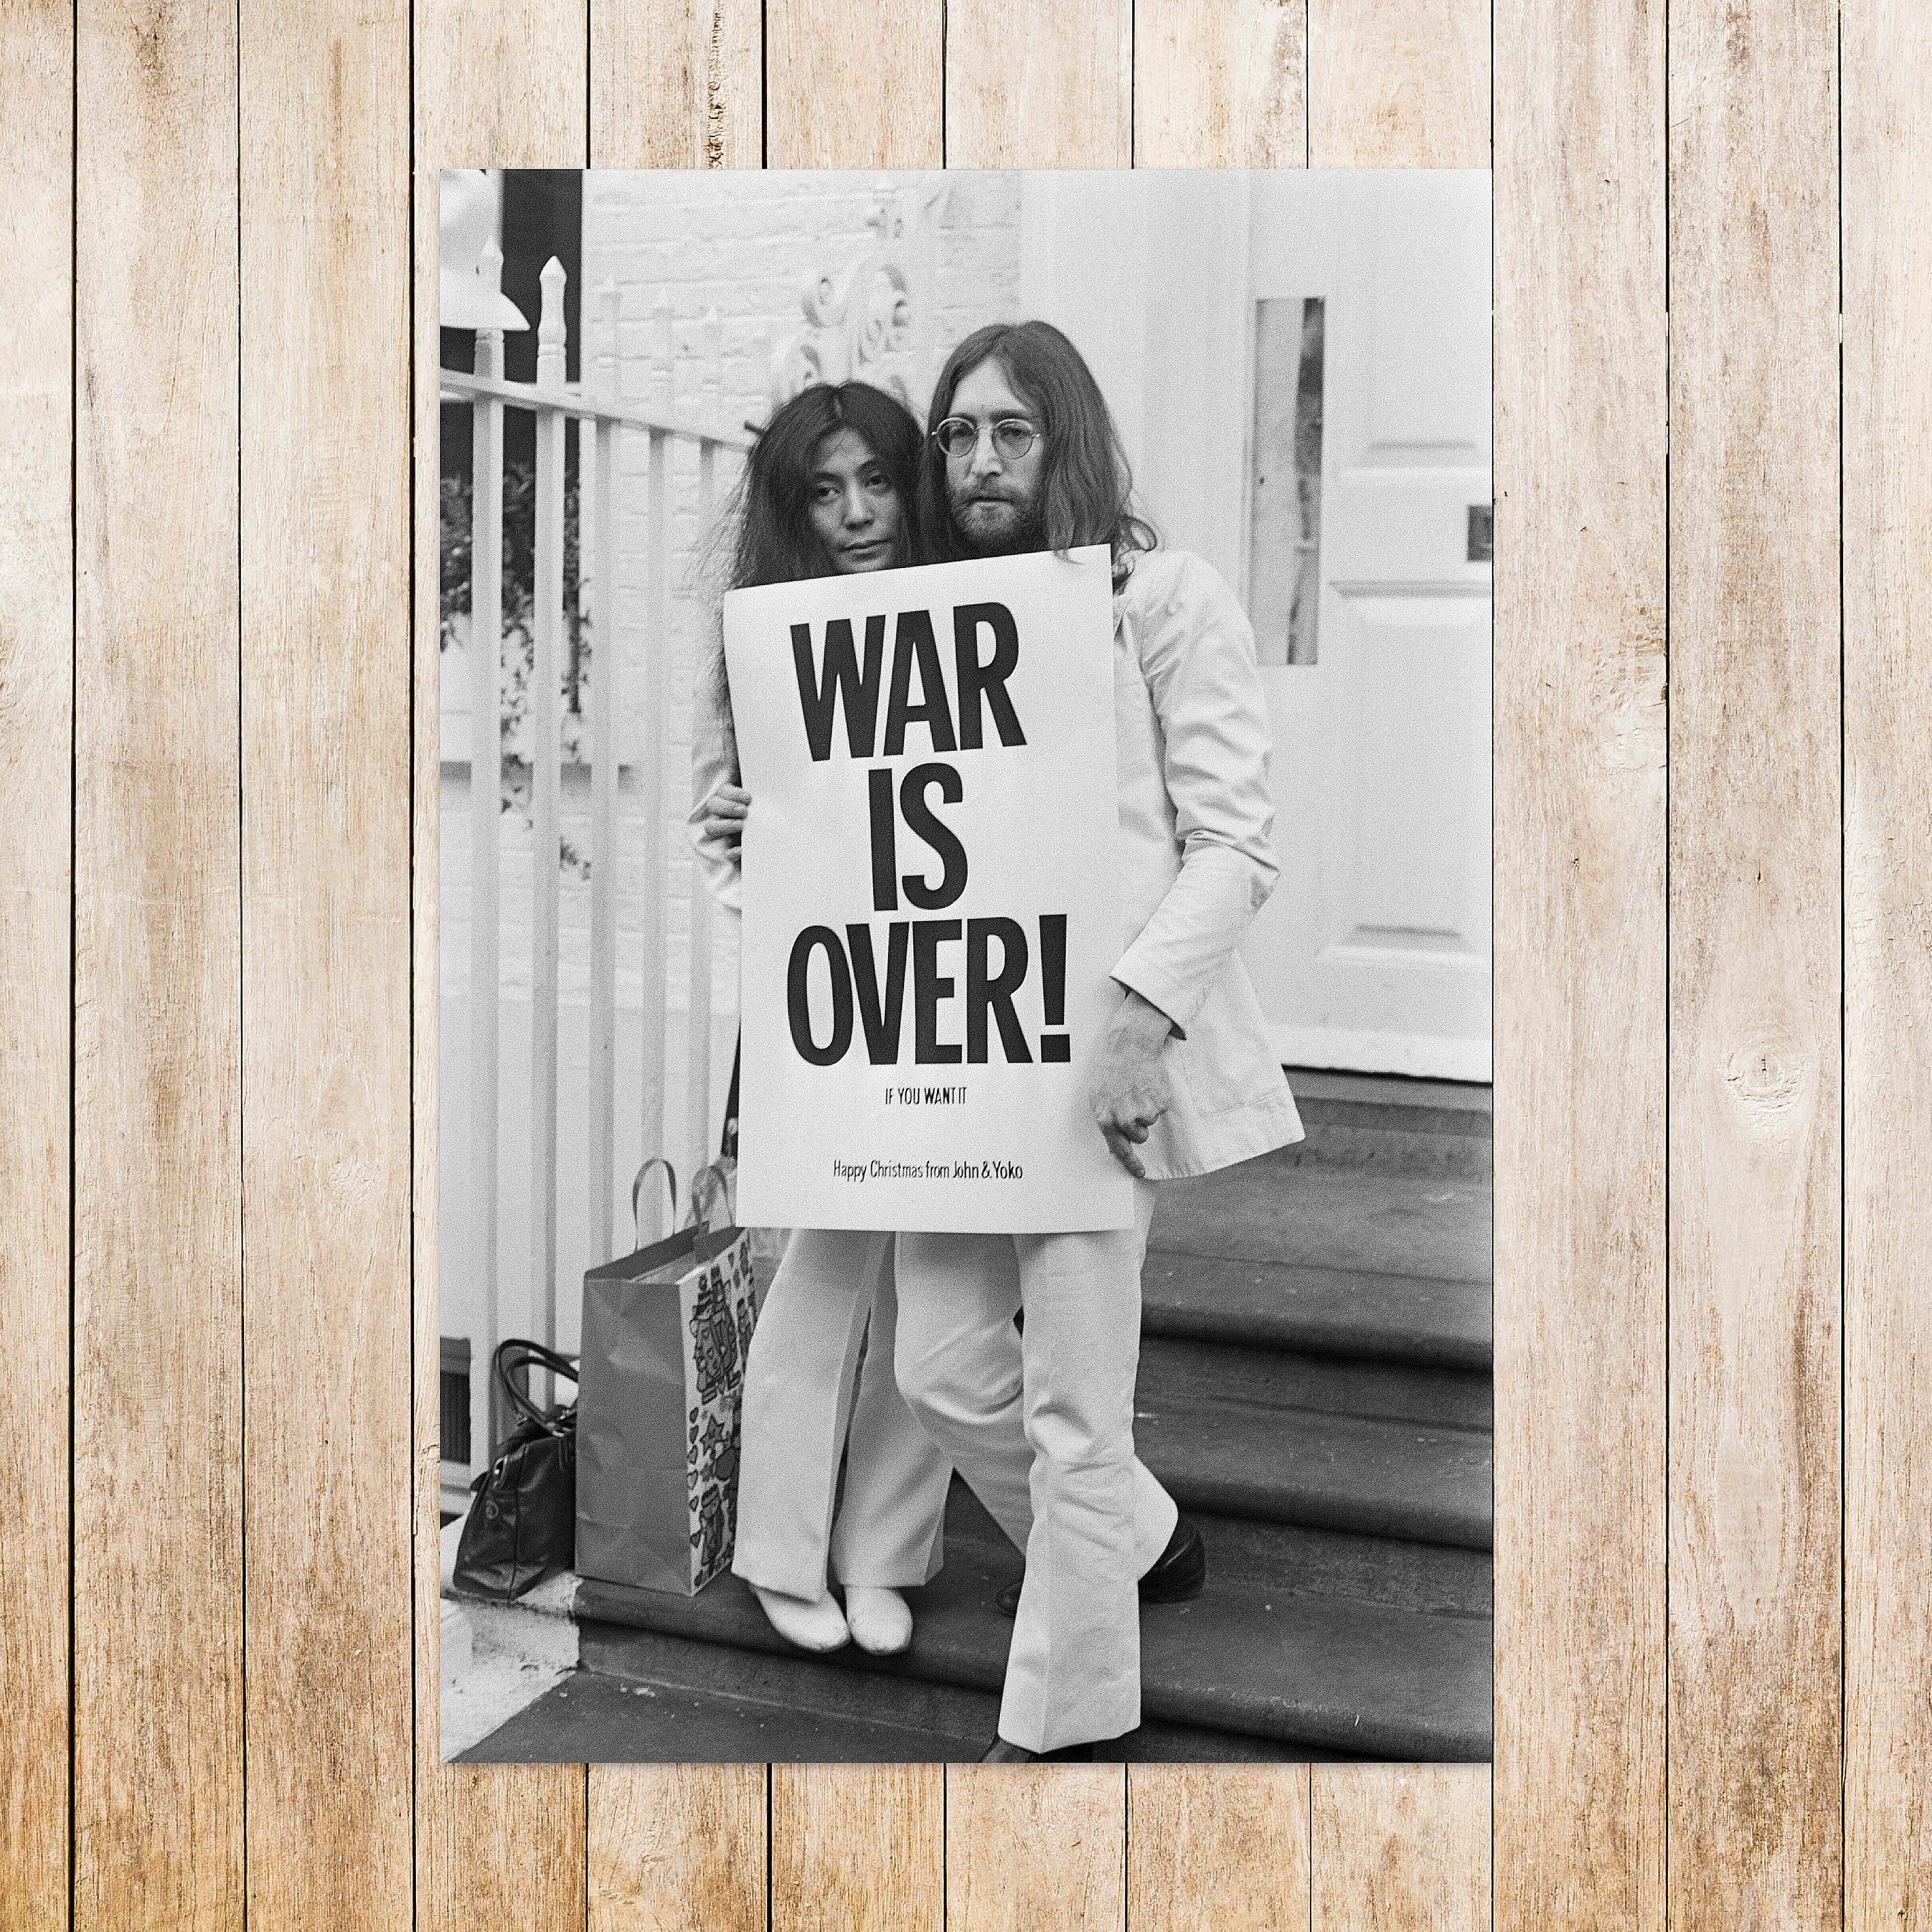 JOHN LENNON & YOKO ONO 1969 War Is Over! (If You Want It) Poster, 20x30